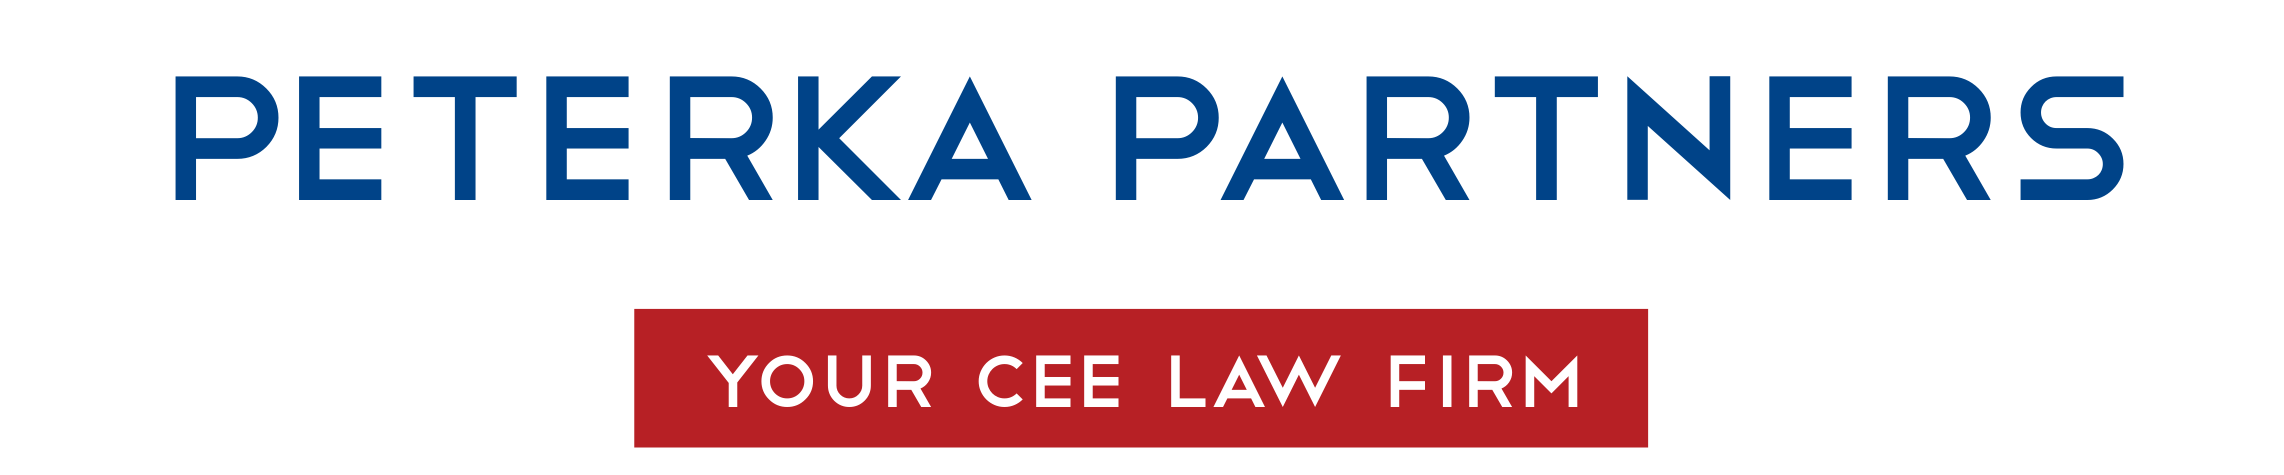 Peterka Partners logo